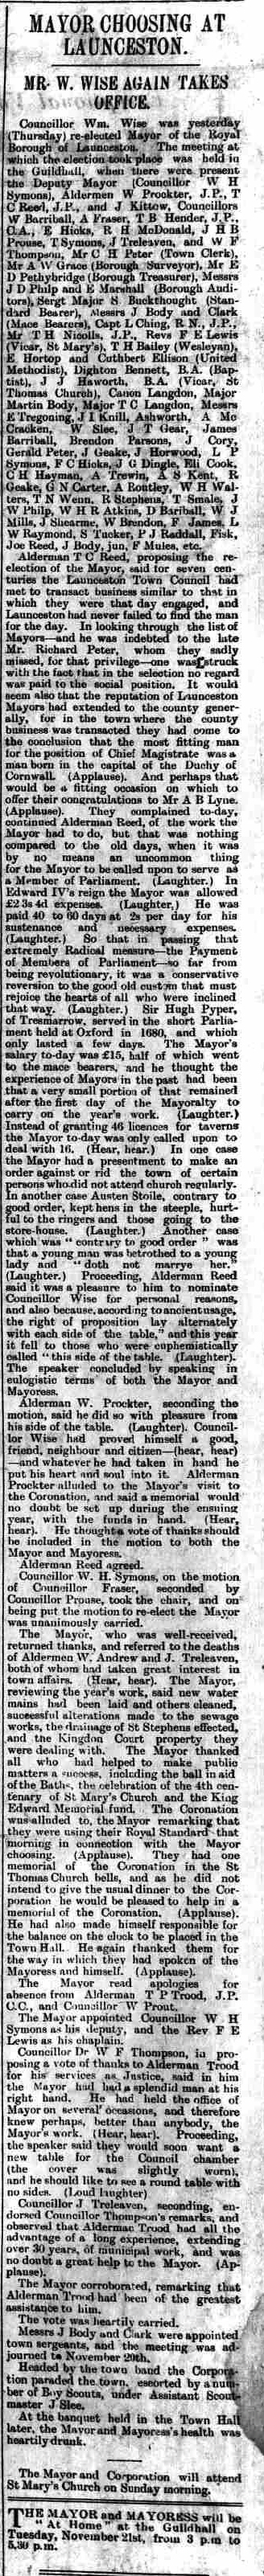 Launceston Mayor choosing report 11 November 1911